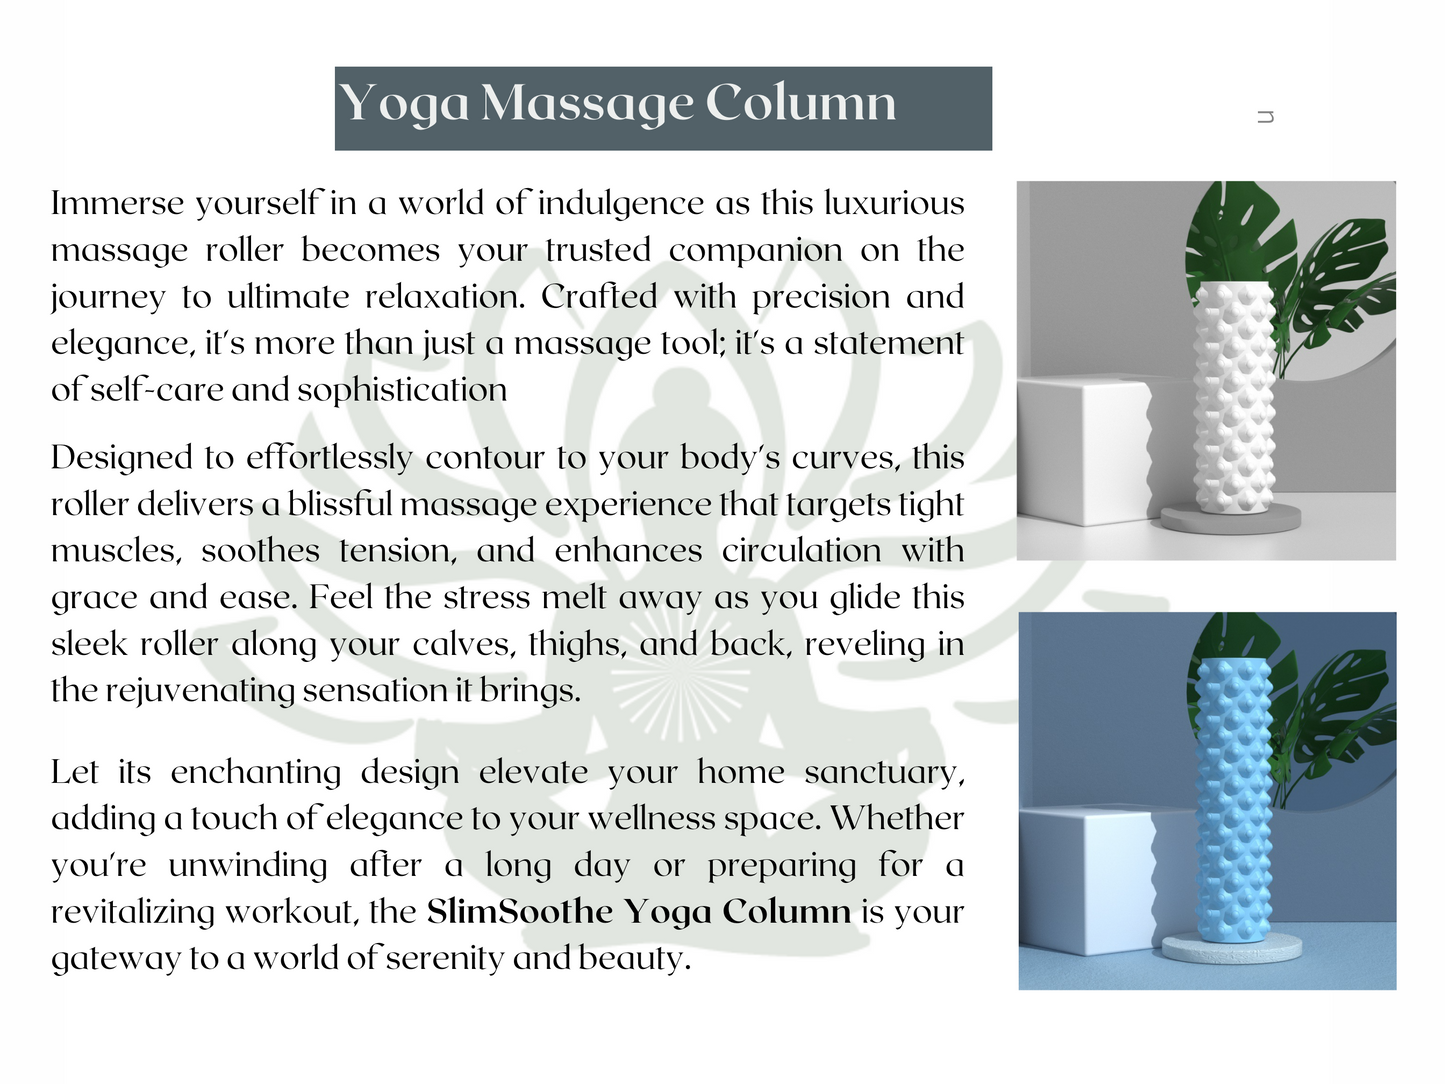 Yoga column roller massager body symphony